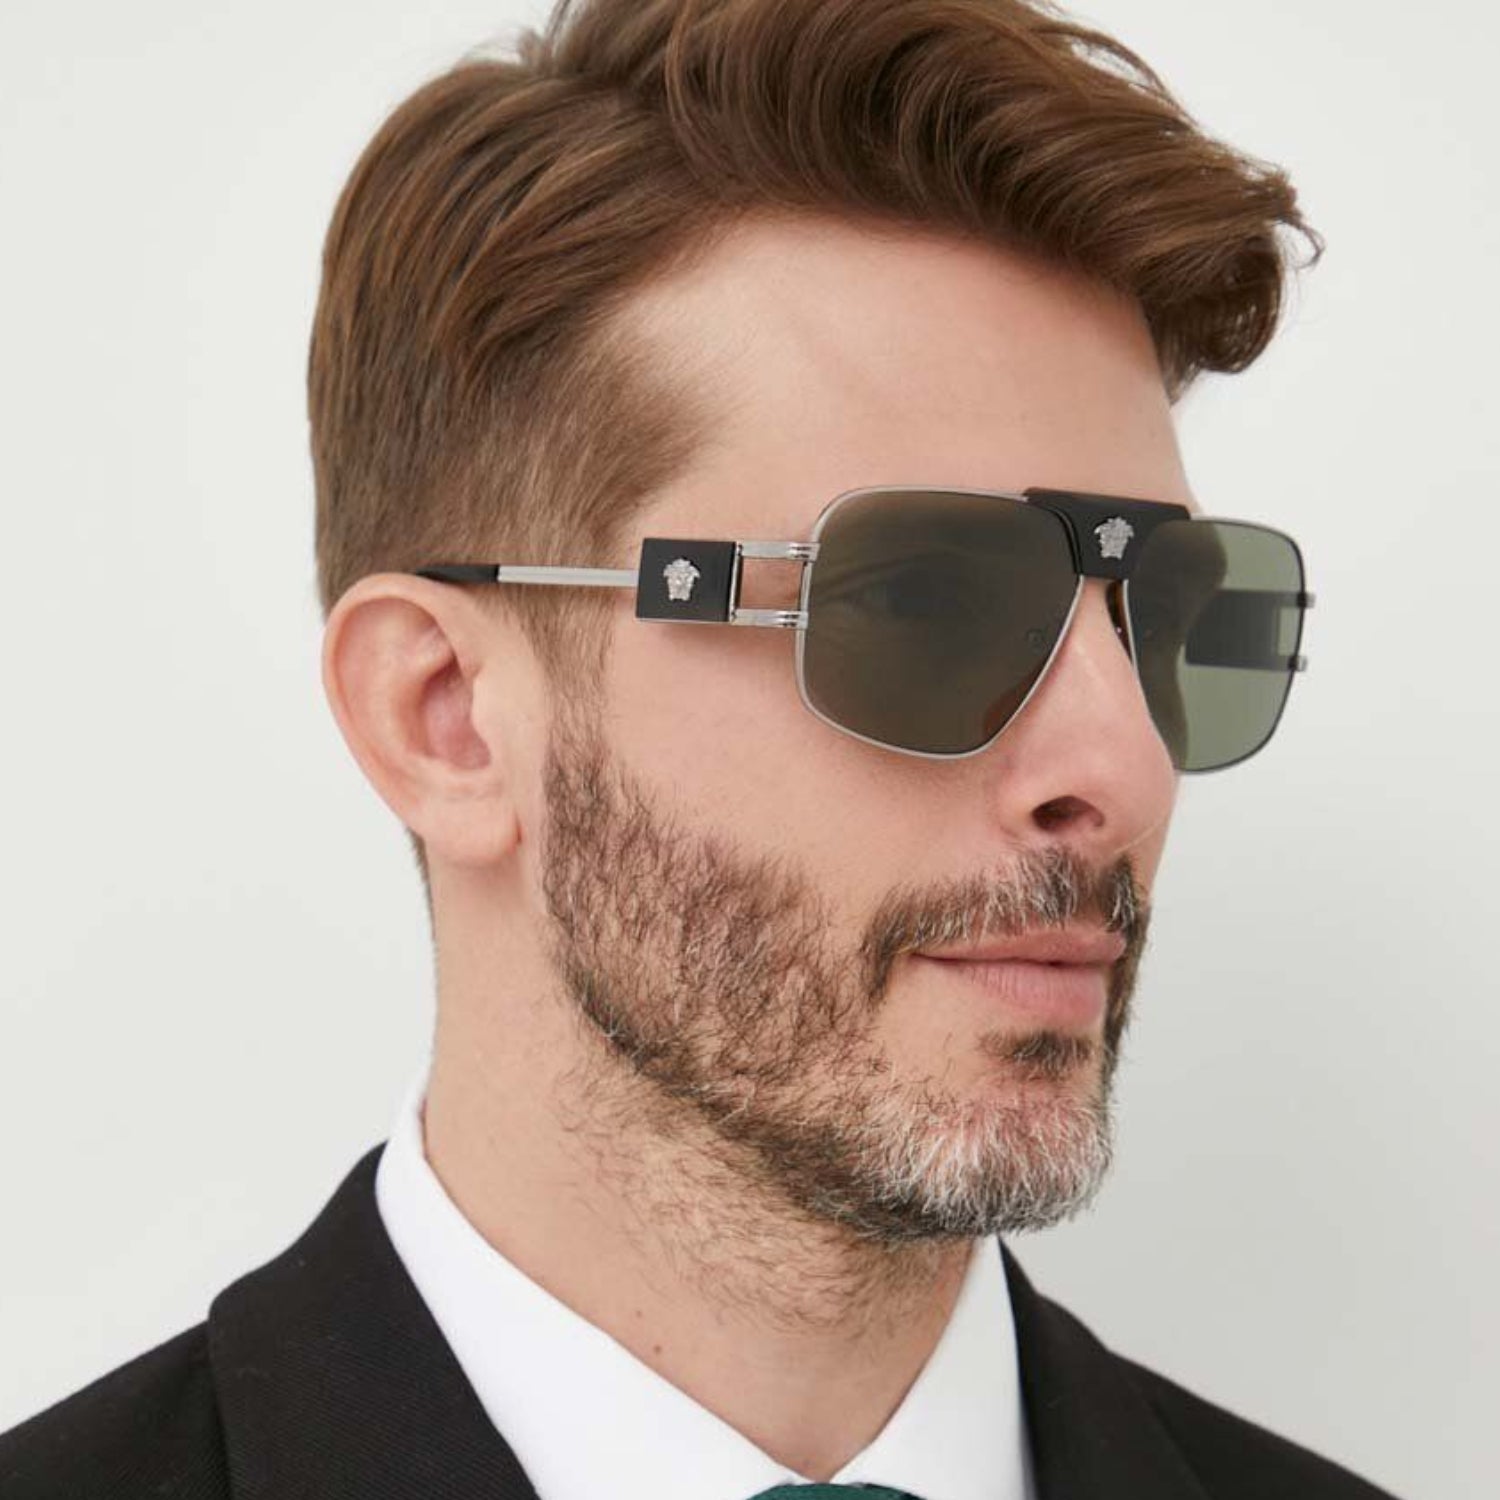 mens-versace-special-project-aviator-sunglasses-0ve2251-10012